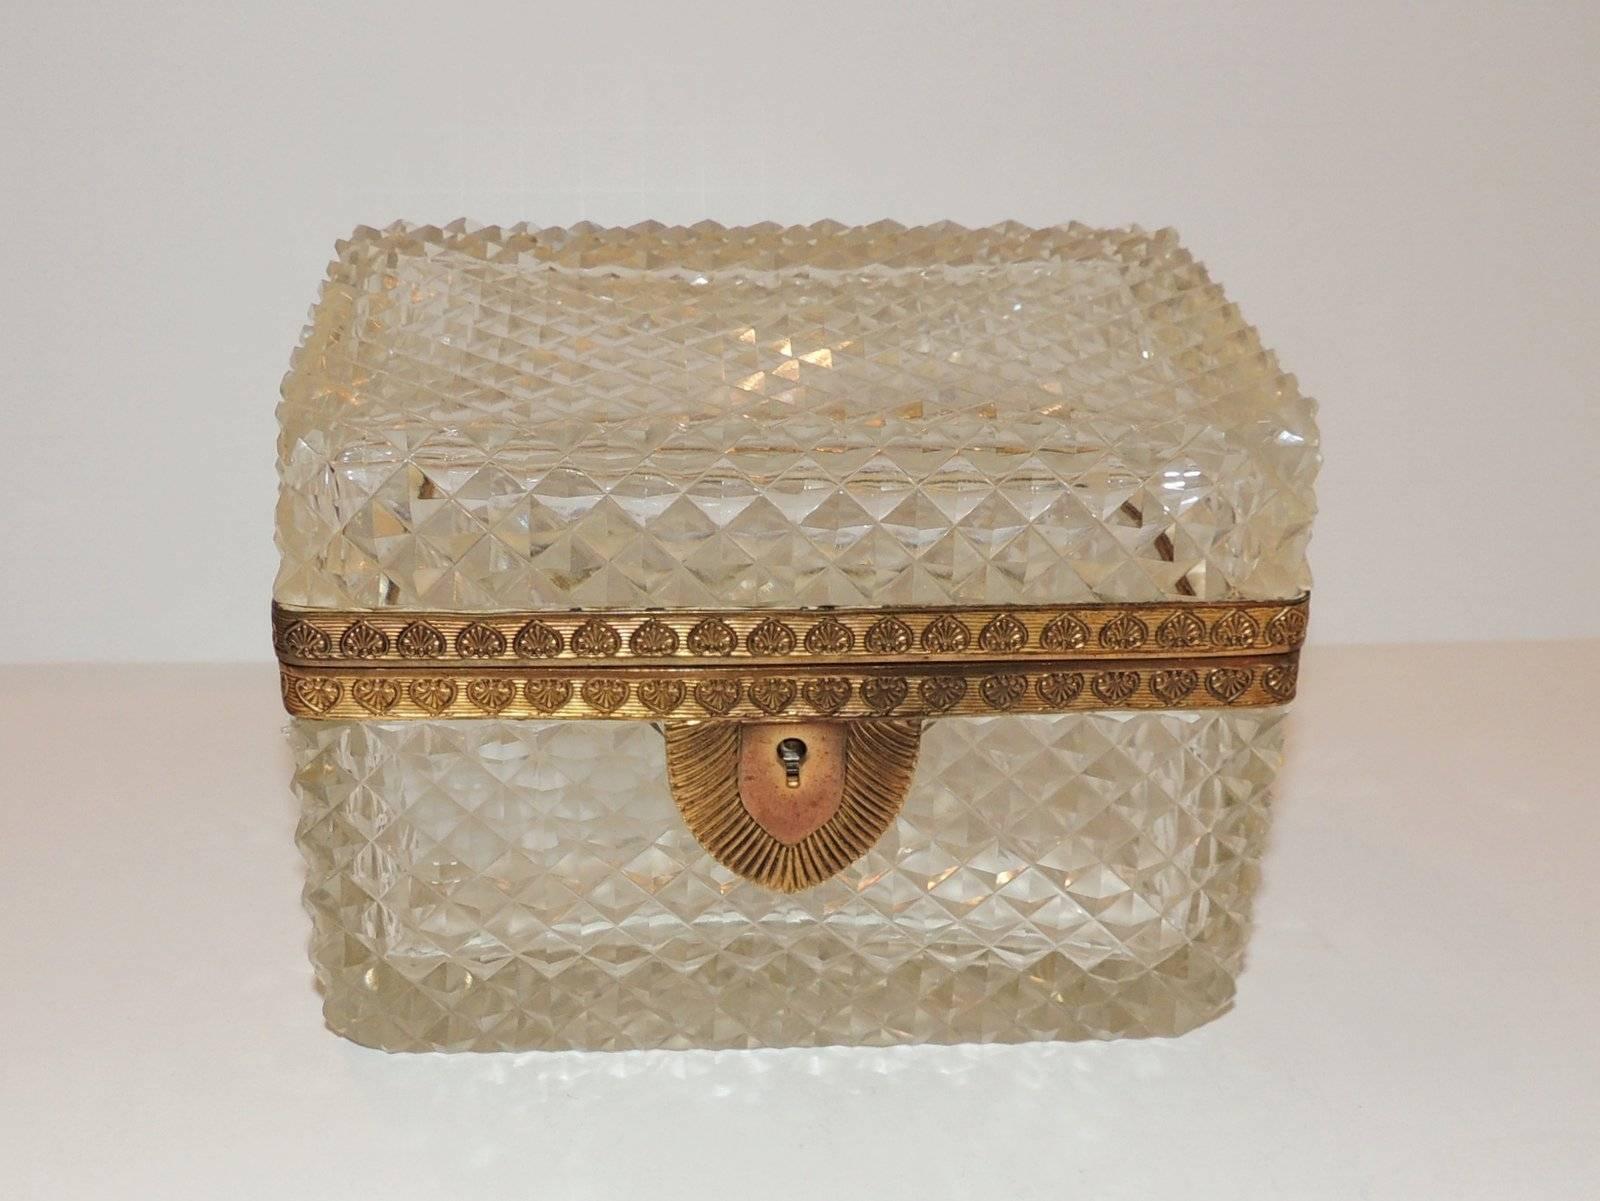 Wonderful diamond shaped crystal box and engraved ormolu with star burst bottom.

Measures: 5.5" W x 4" H x 3.75" D.